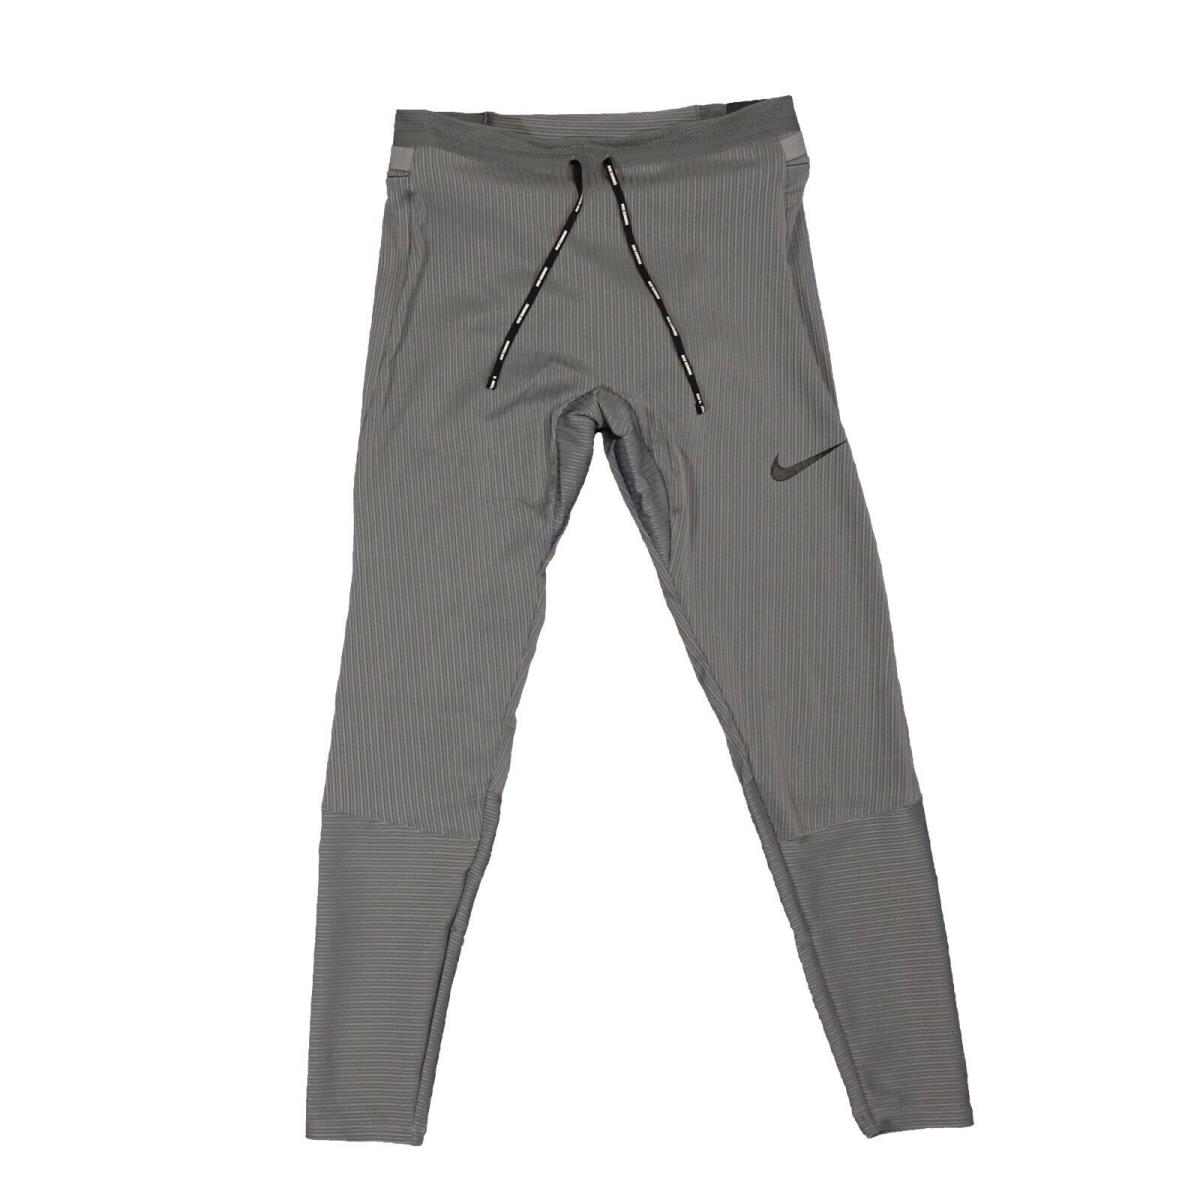 Nike Dri-fit Swift Running Tights Full Length Run Pants Smoke Grey Large